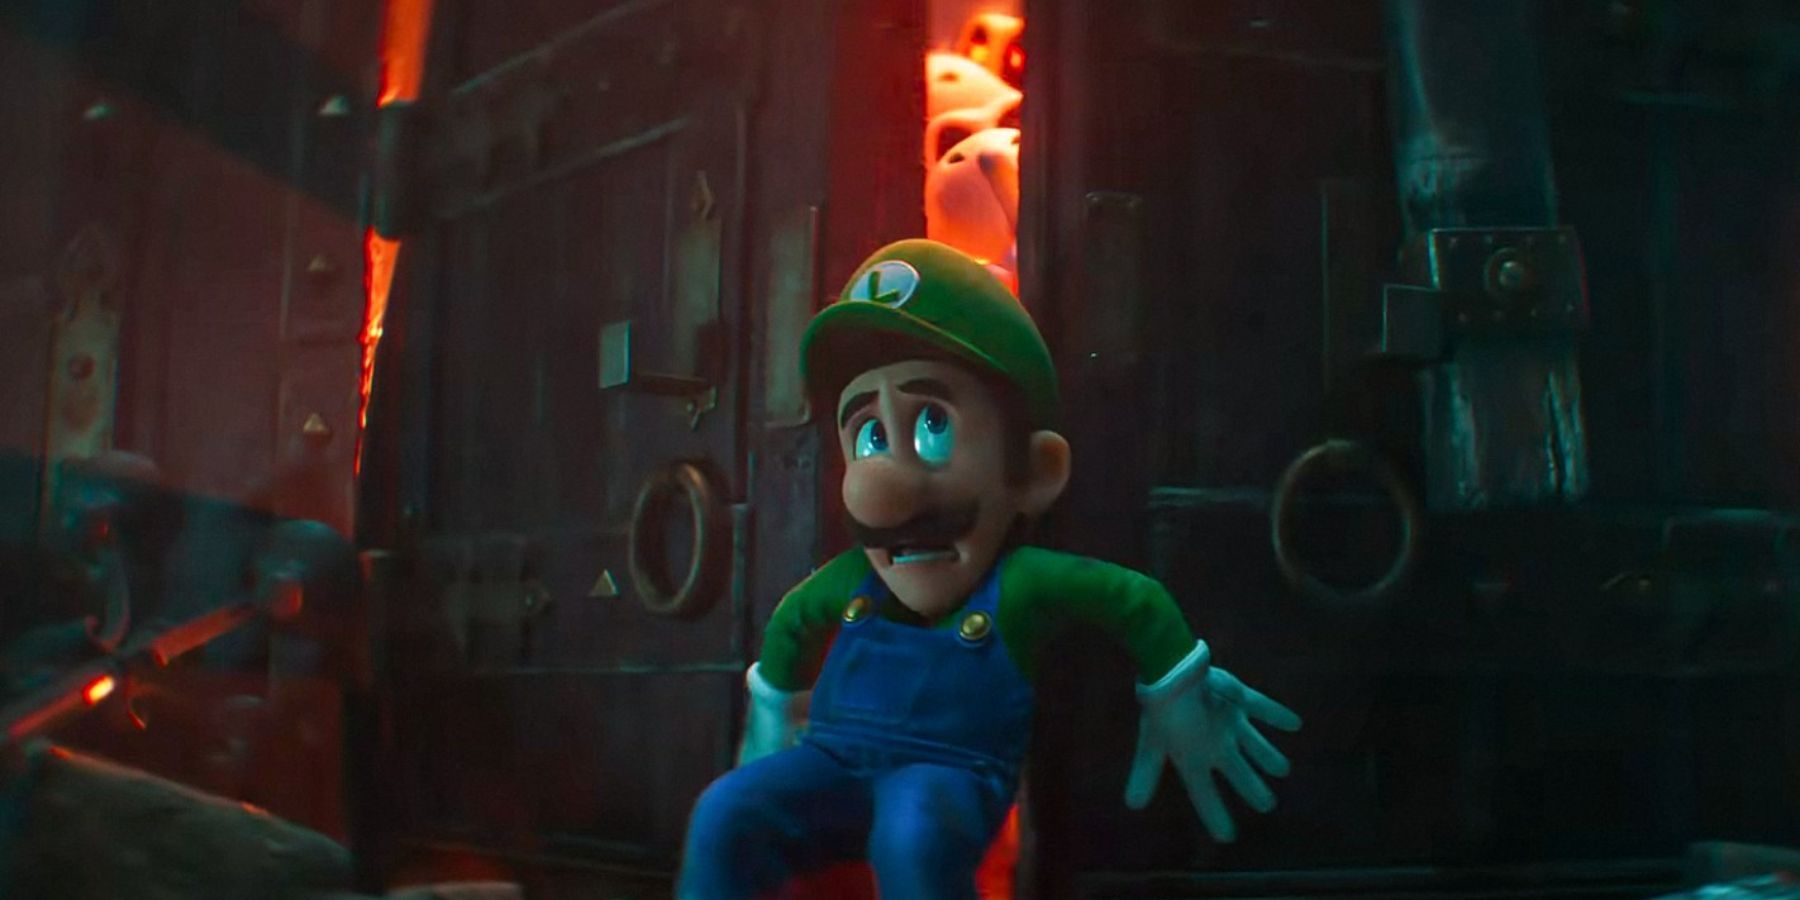 Someone edited the new Super Mario Bros trailer to include classic